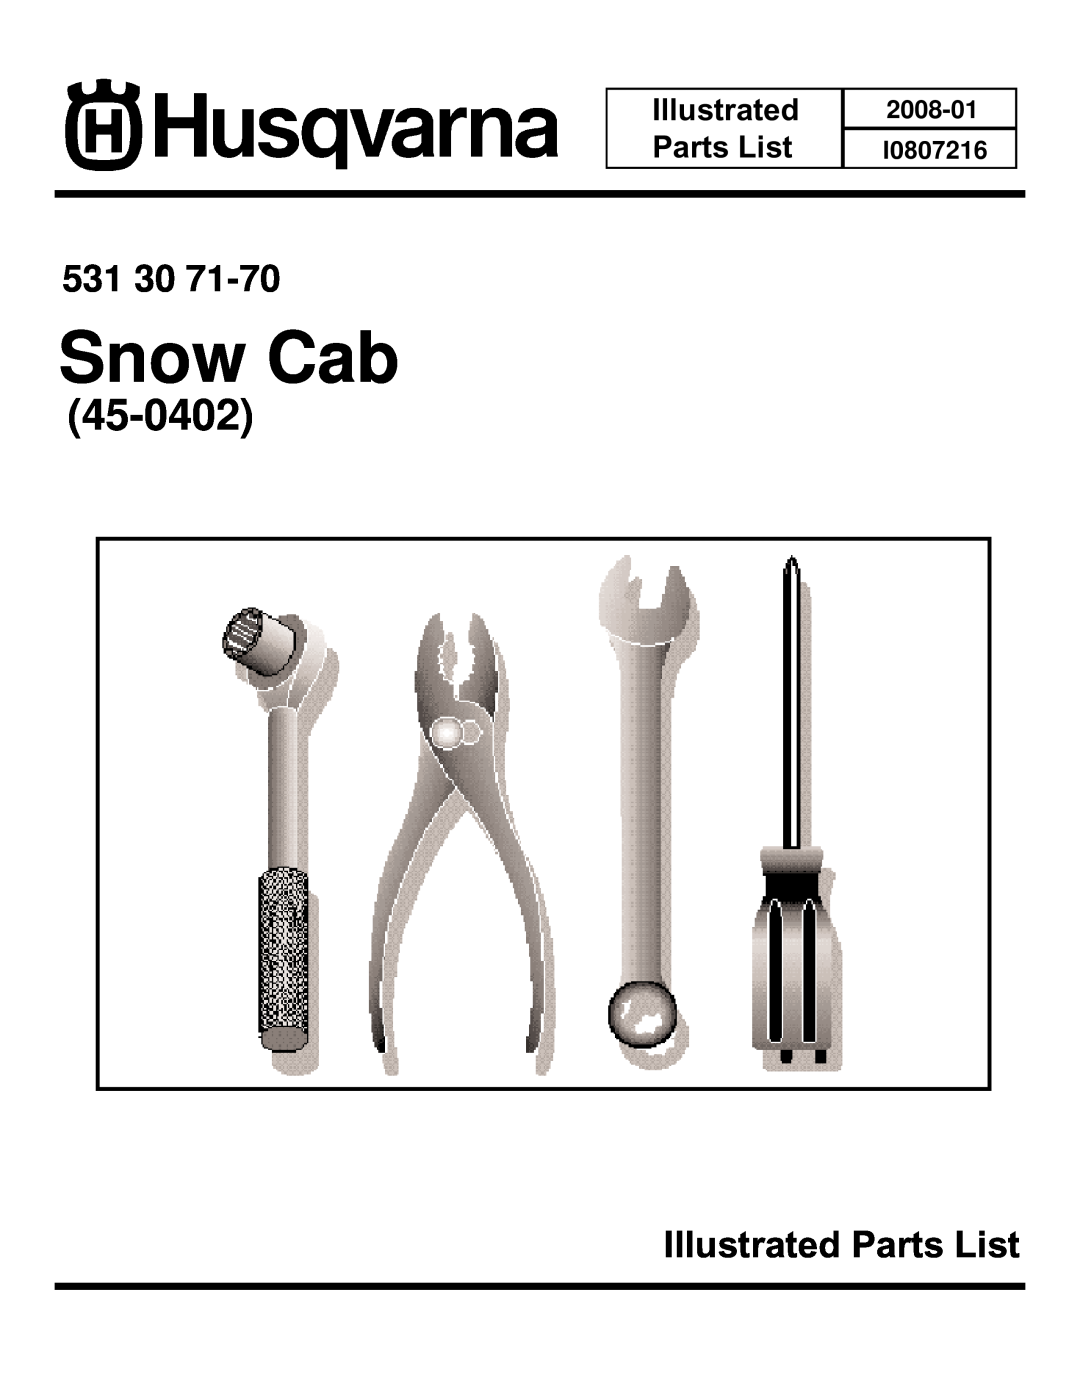 Agri-Fab 45-0402 manual Snow Cab, 531, Illustrated Parts List, 2008-01 I0807216 